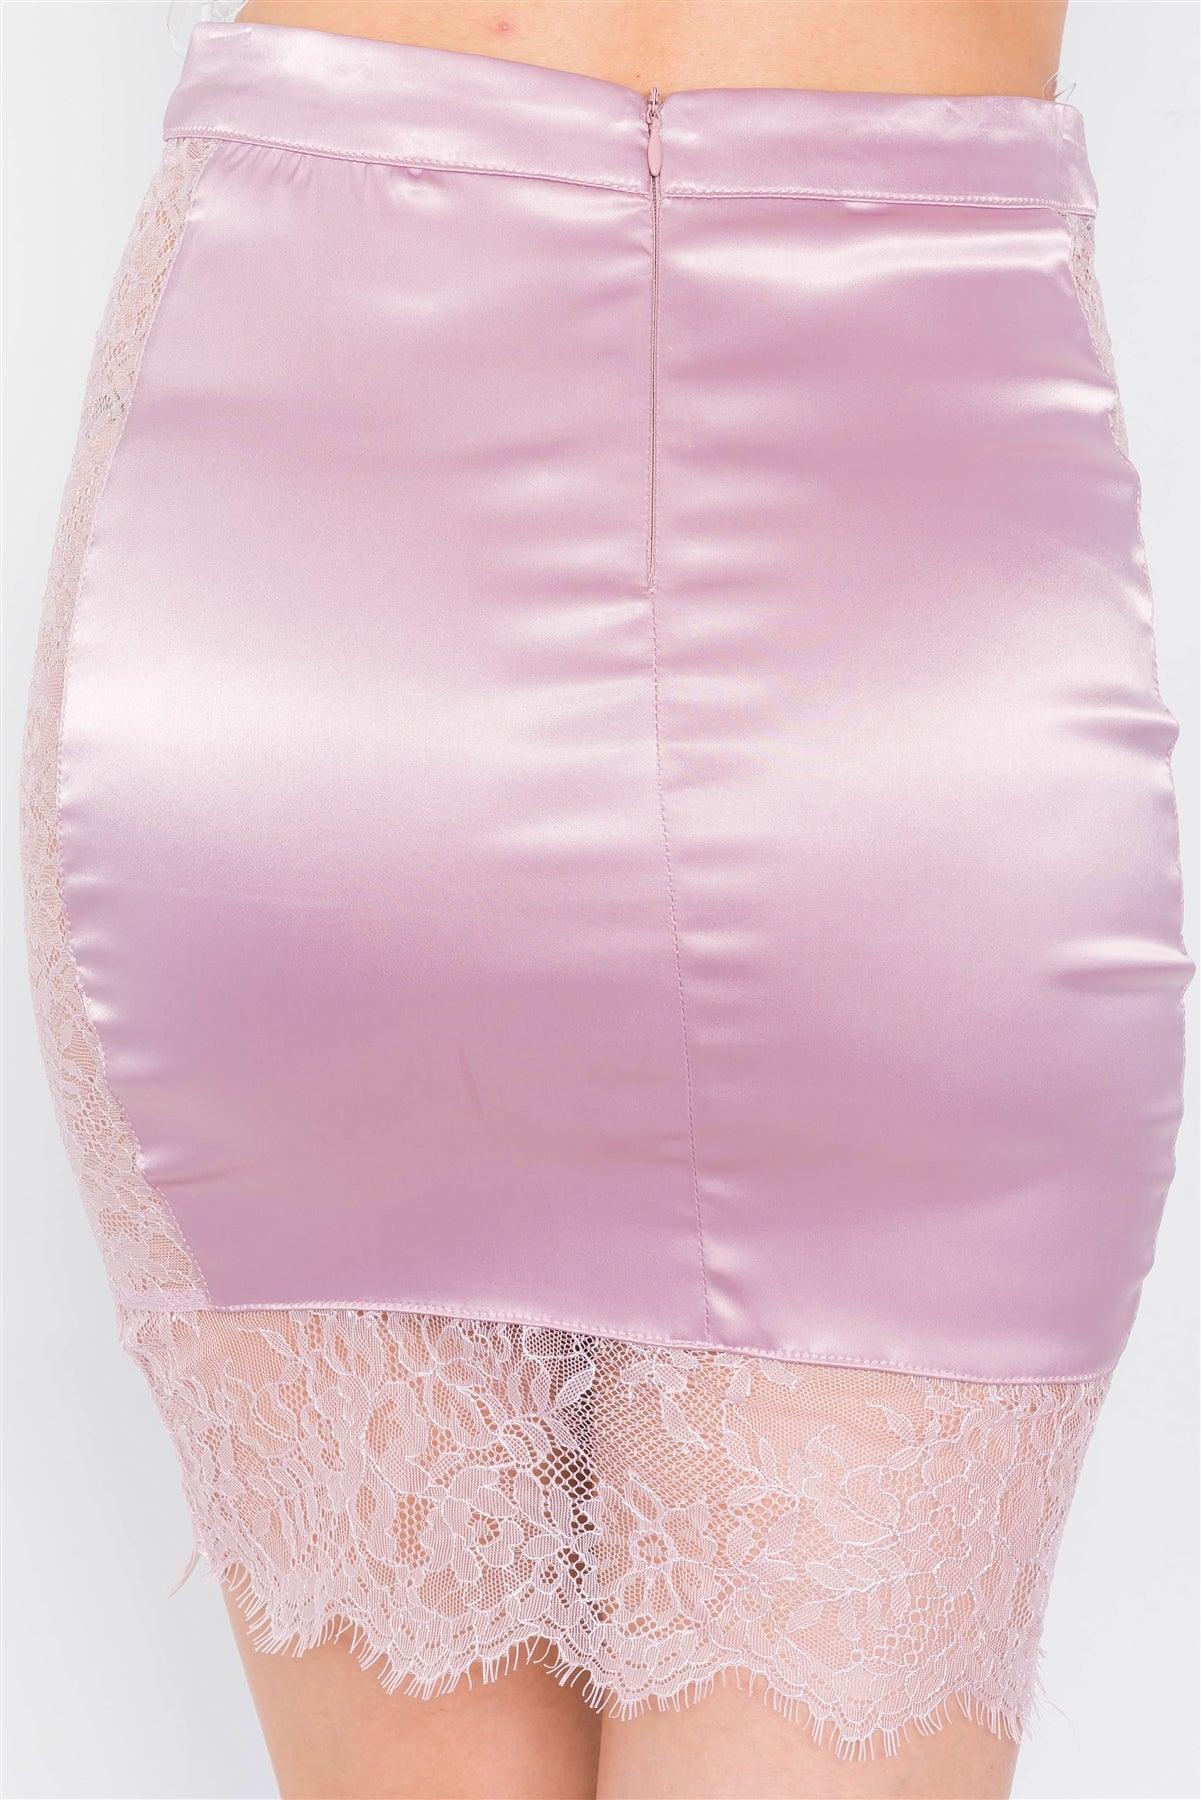 Blush Pink Mauve Satin Lace Nylon Cut Out Side Chic Mini Skirt /2-2-2